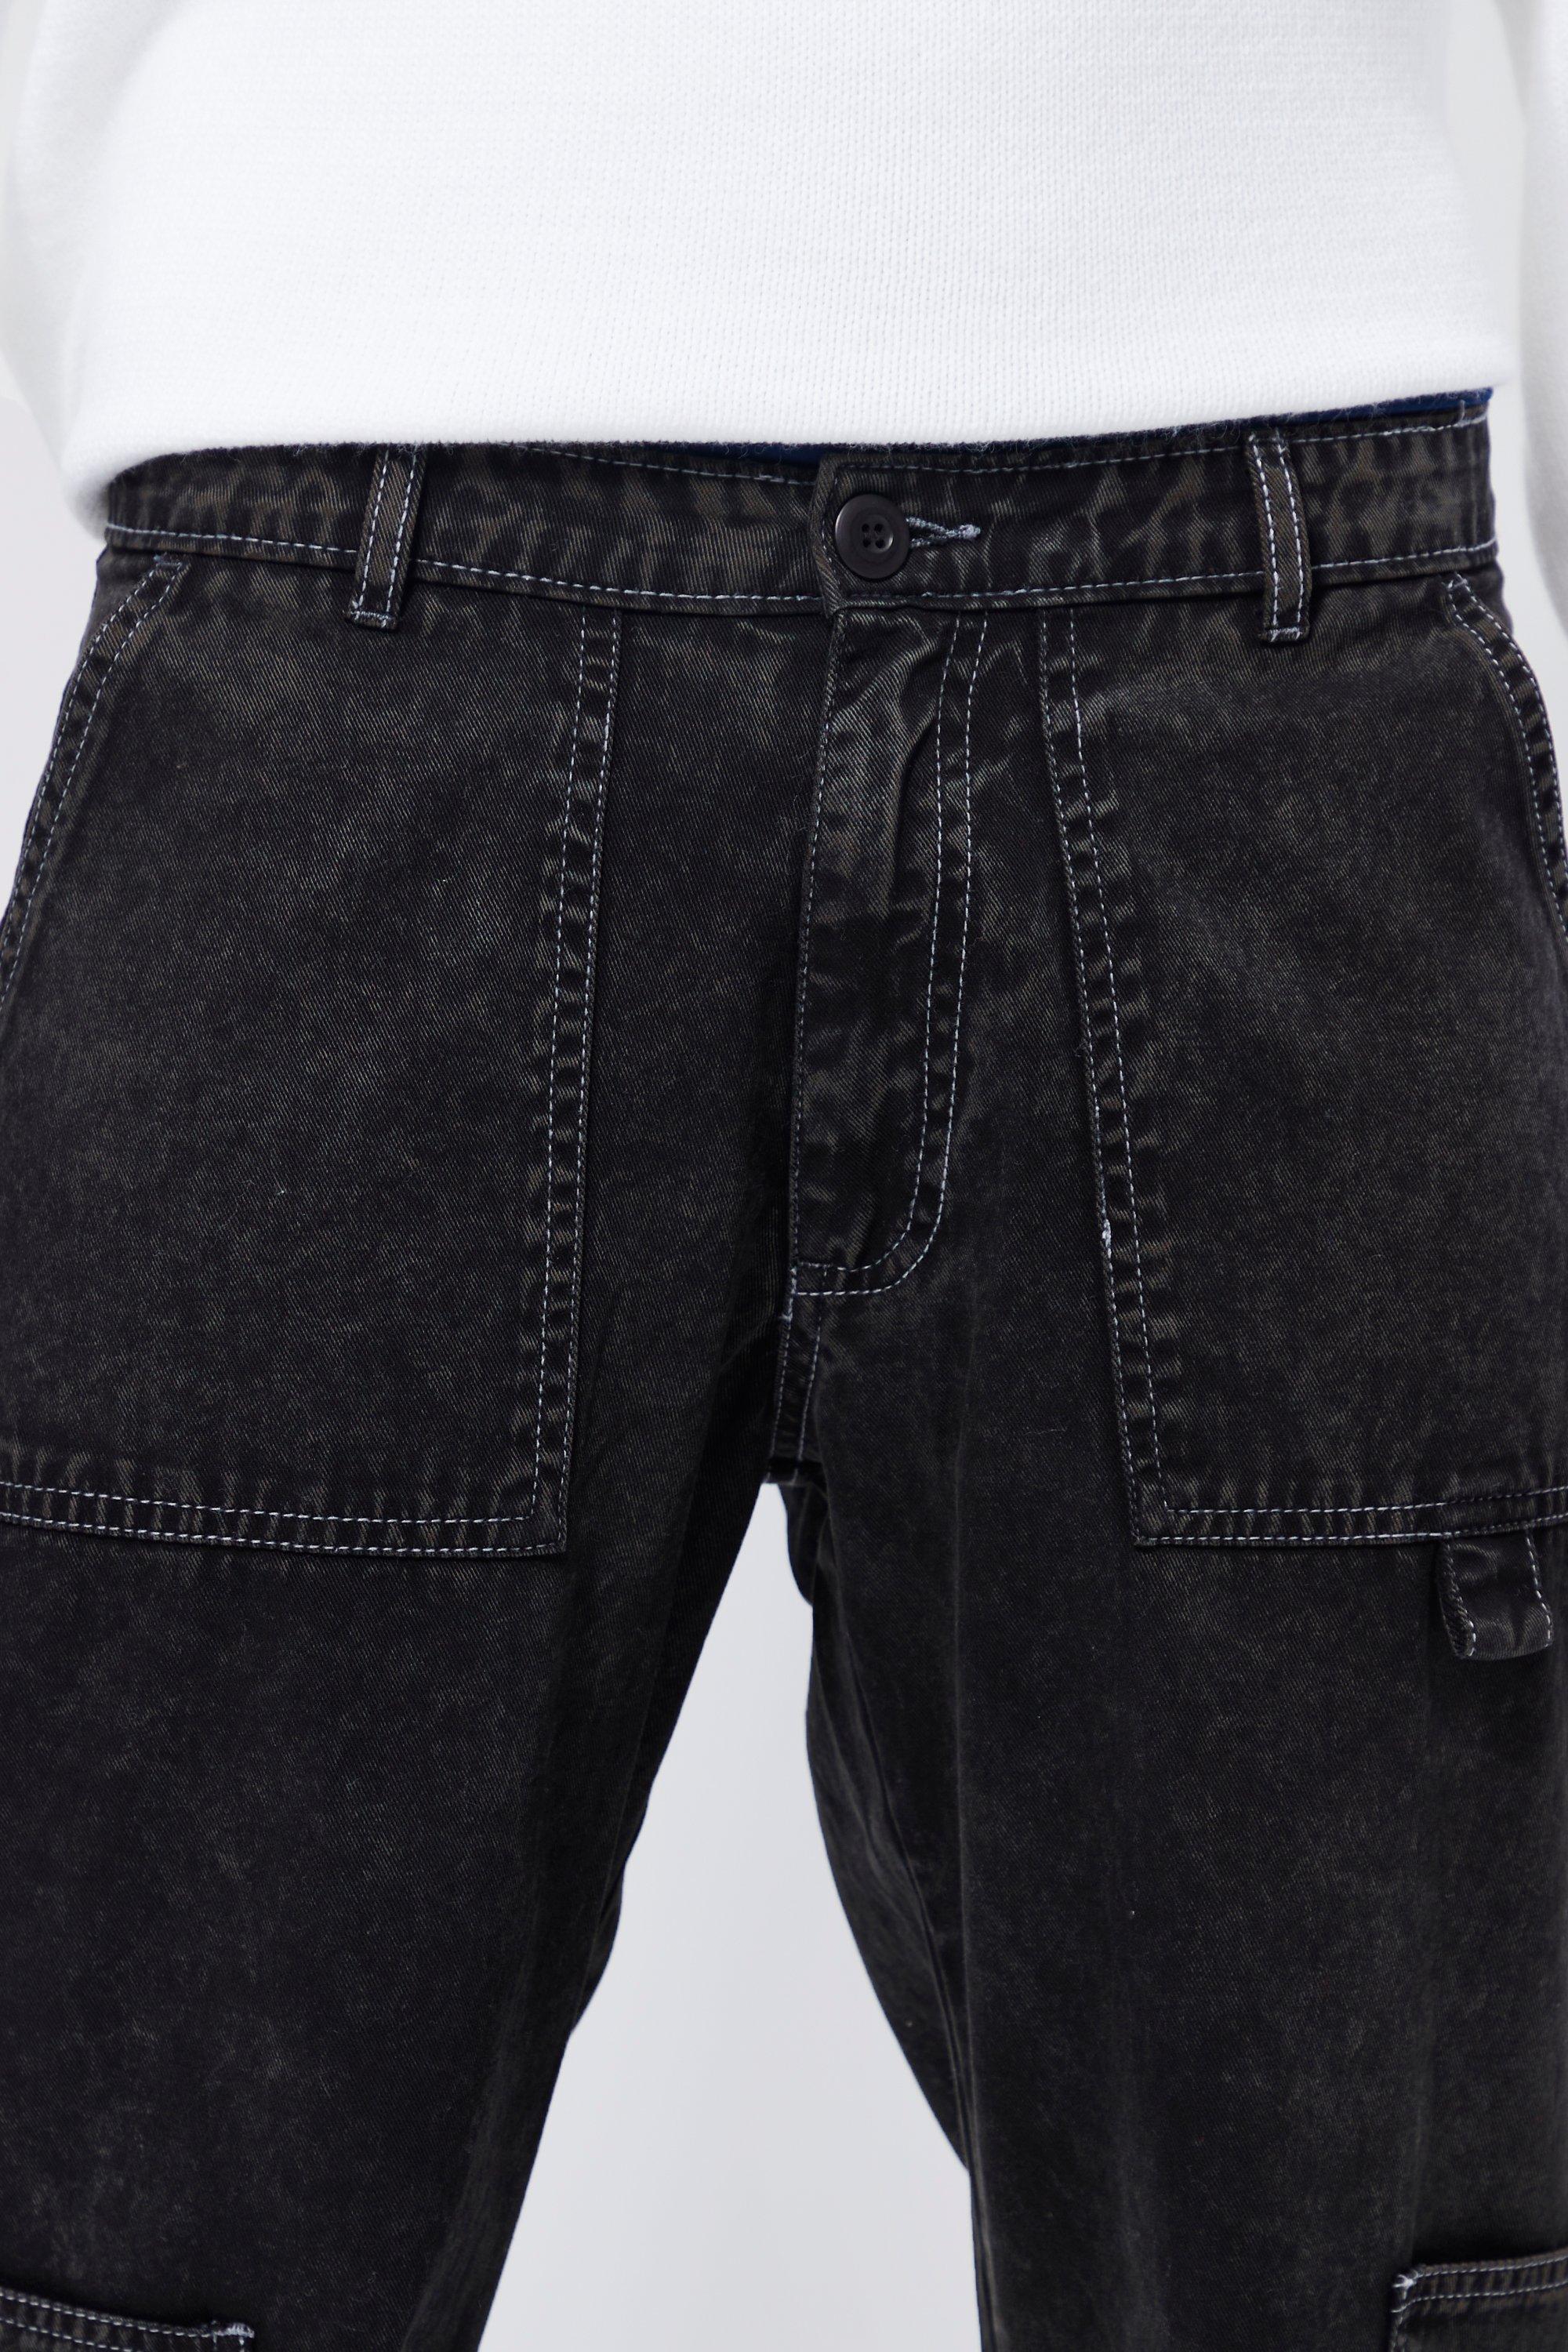 Topshop buckle carpenter jeans in washed black